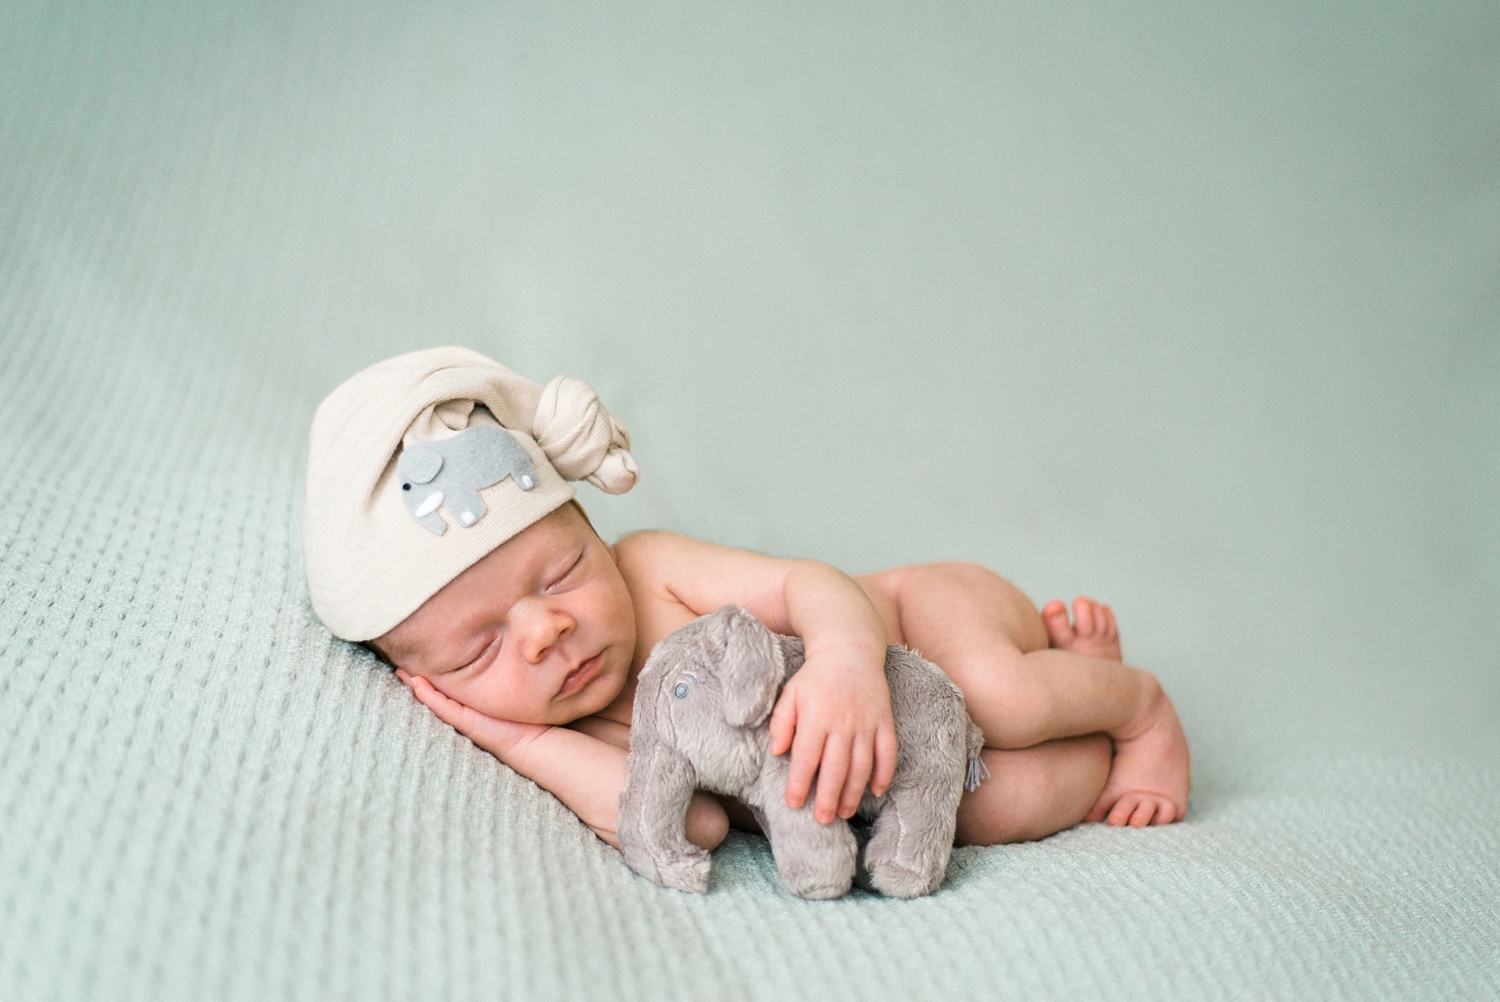 best-portland-oregon-newborn-photographer-sleeping-baby-boy-cuddling-with-elephant-stuffed-animal-shelley-marie-photography-40.jpg